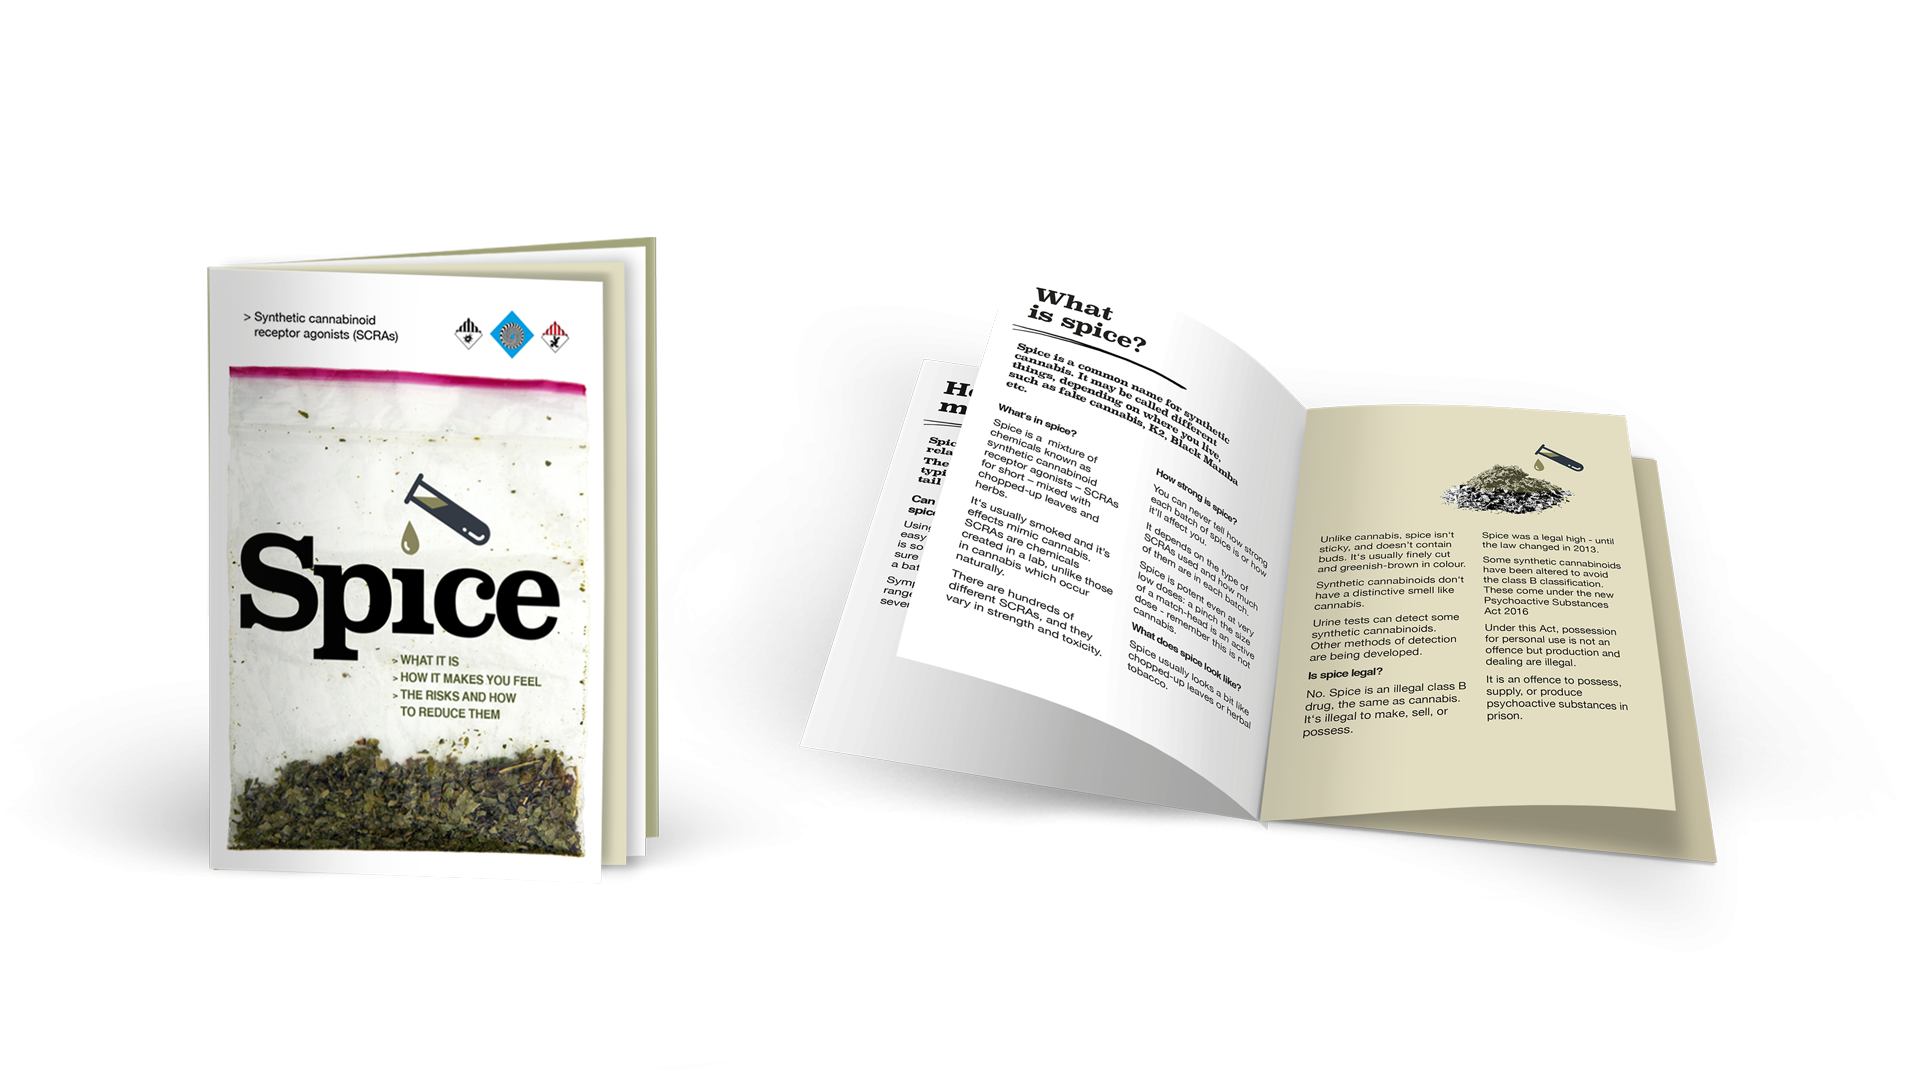 Spice drug information booklet - front cover design and inside pages